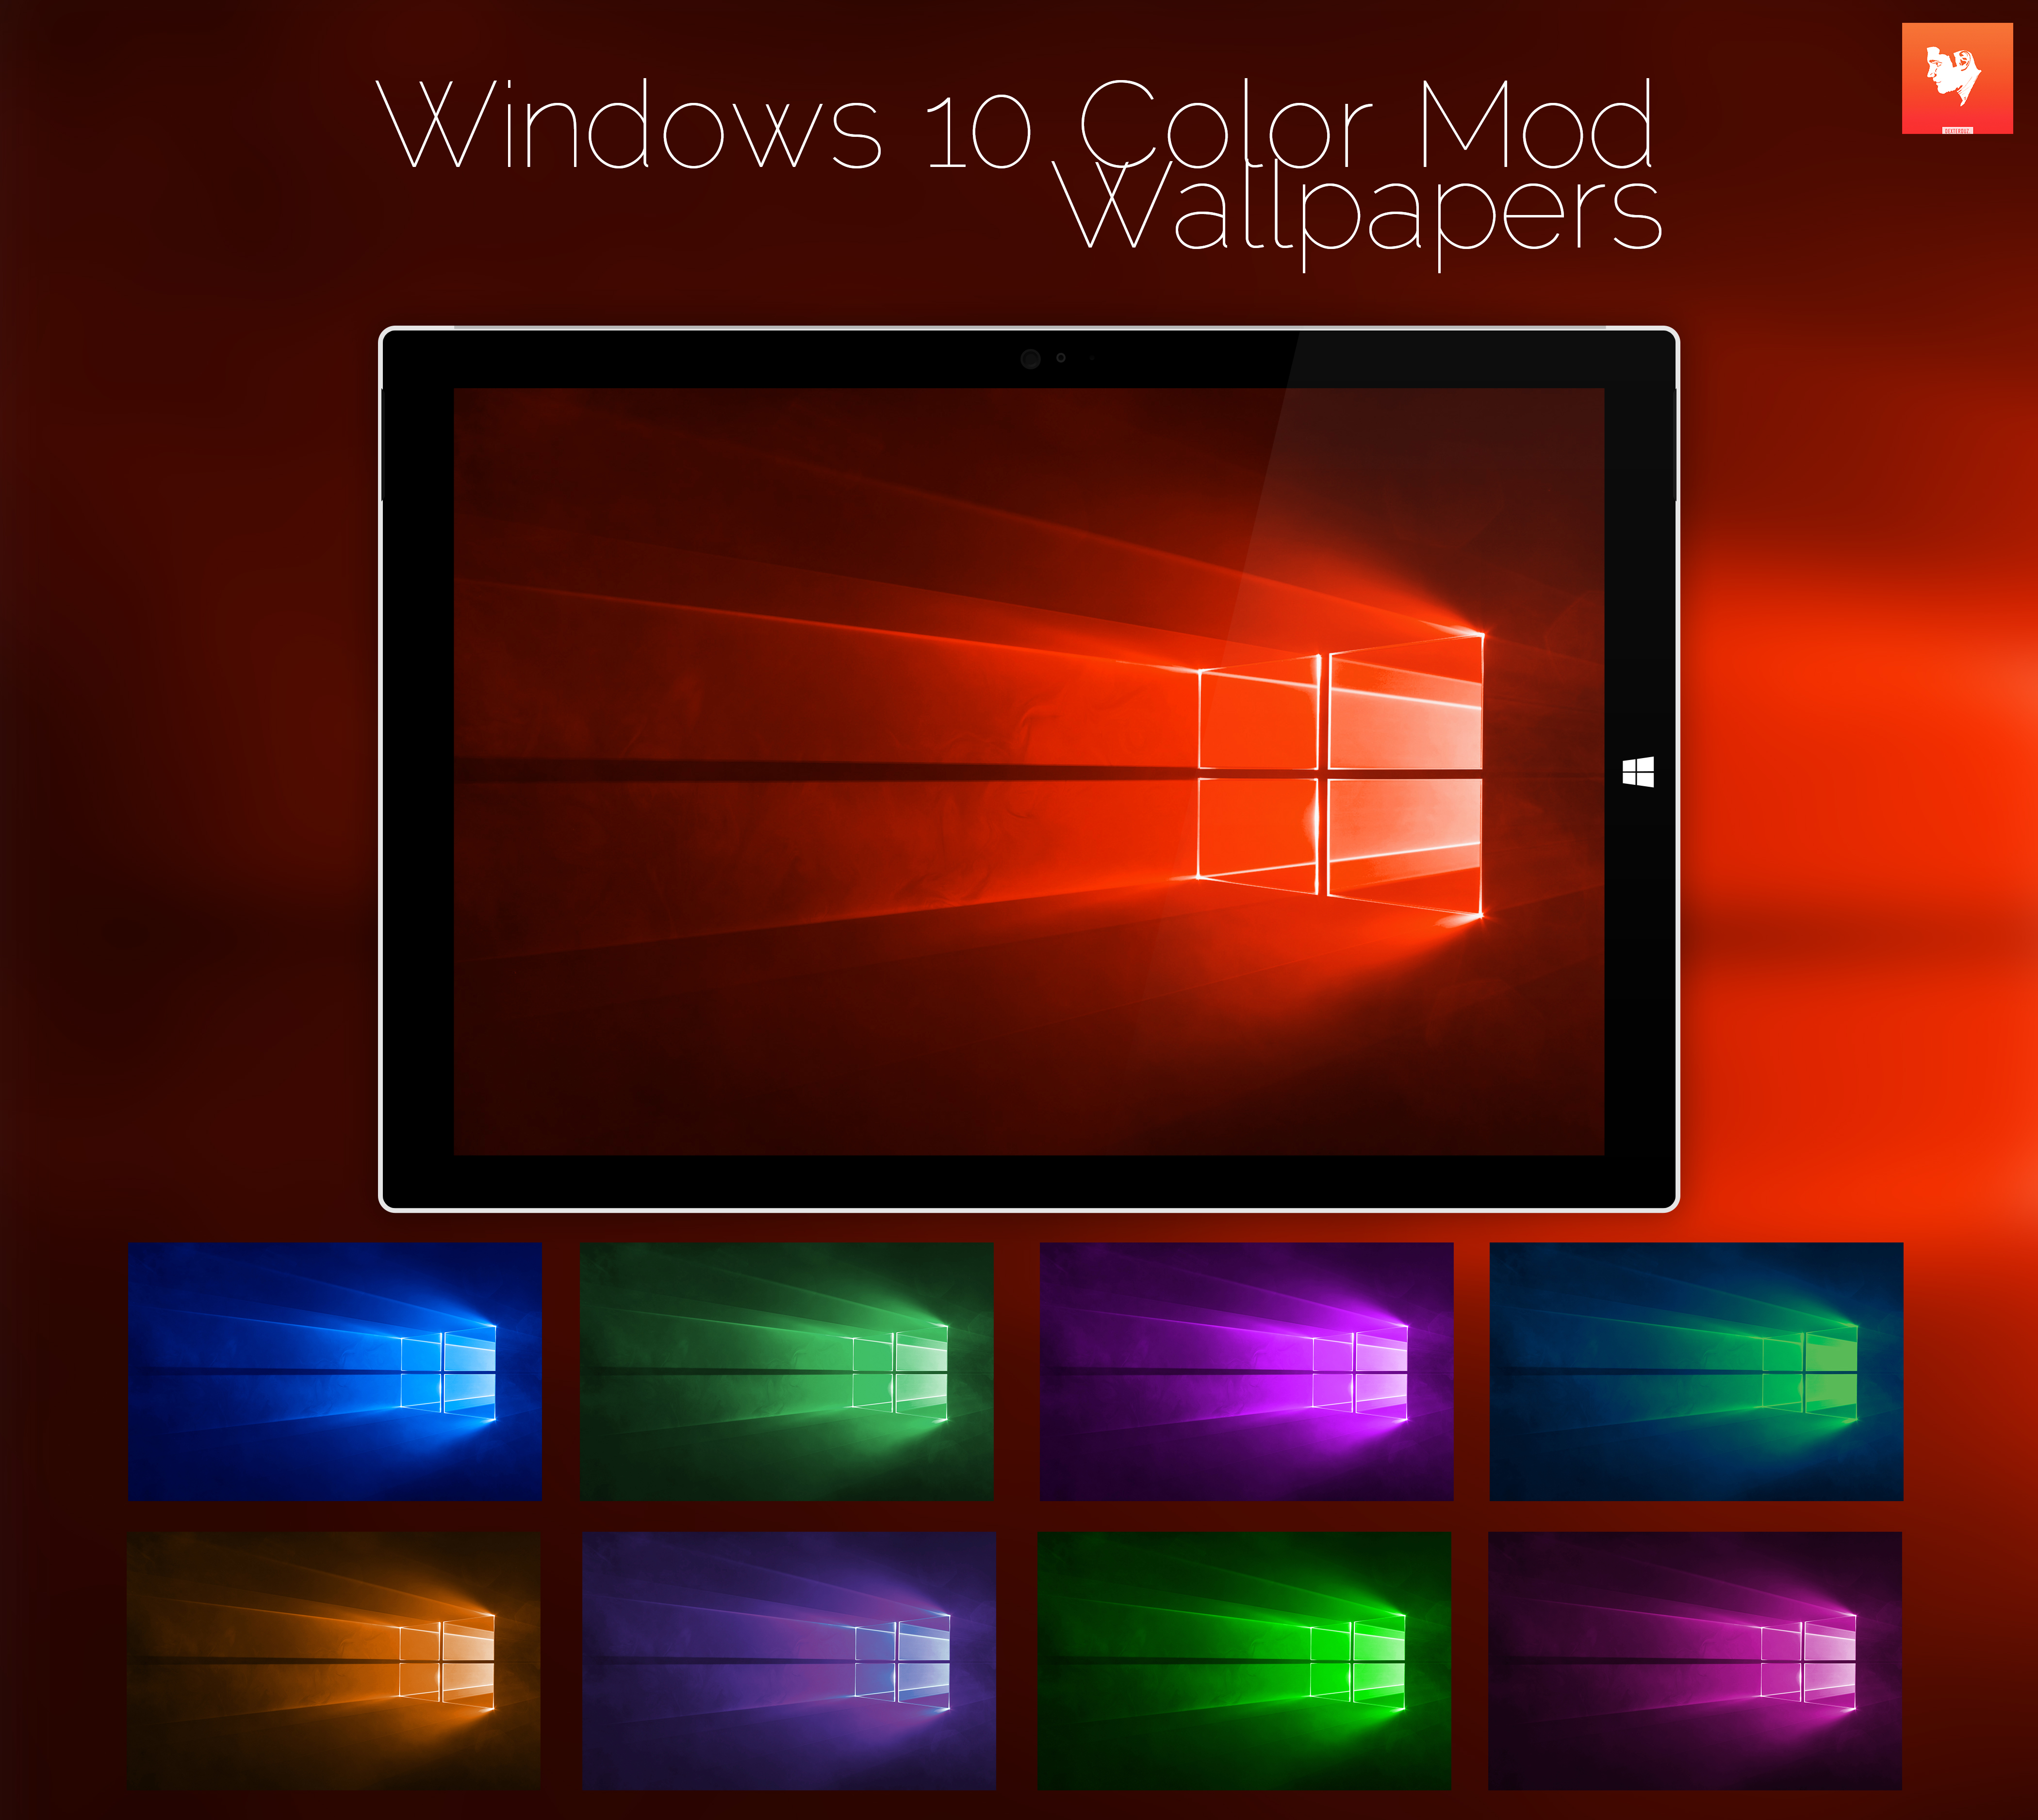 Windows 10 Color Mod Wallpaper By Dexterouz On DeviantArt